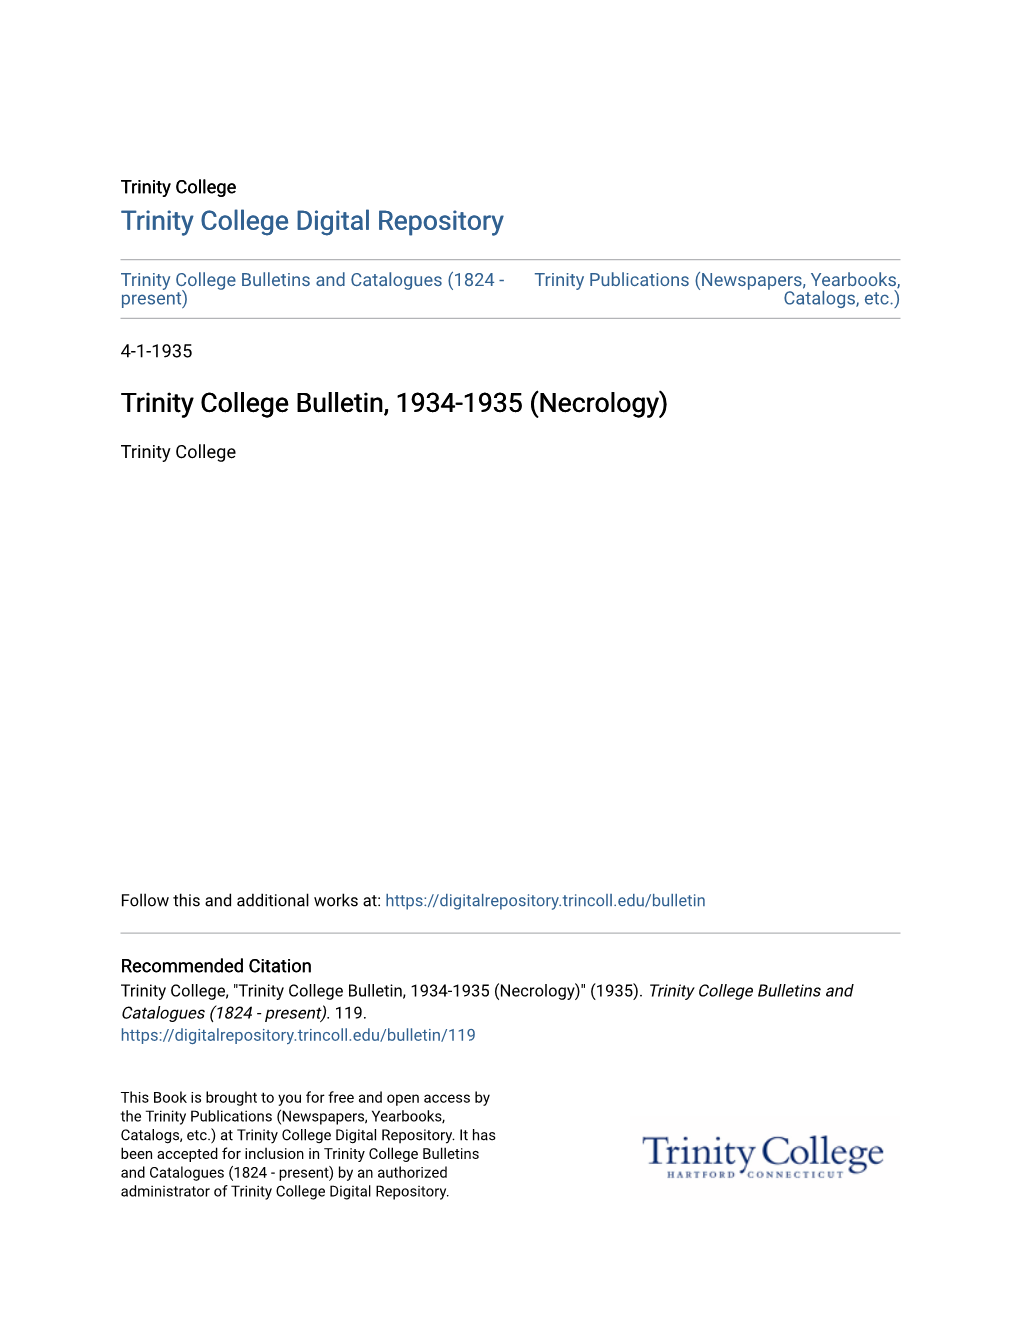 Trinity College Bulletin, 1934-1935 (Necrology)